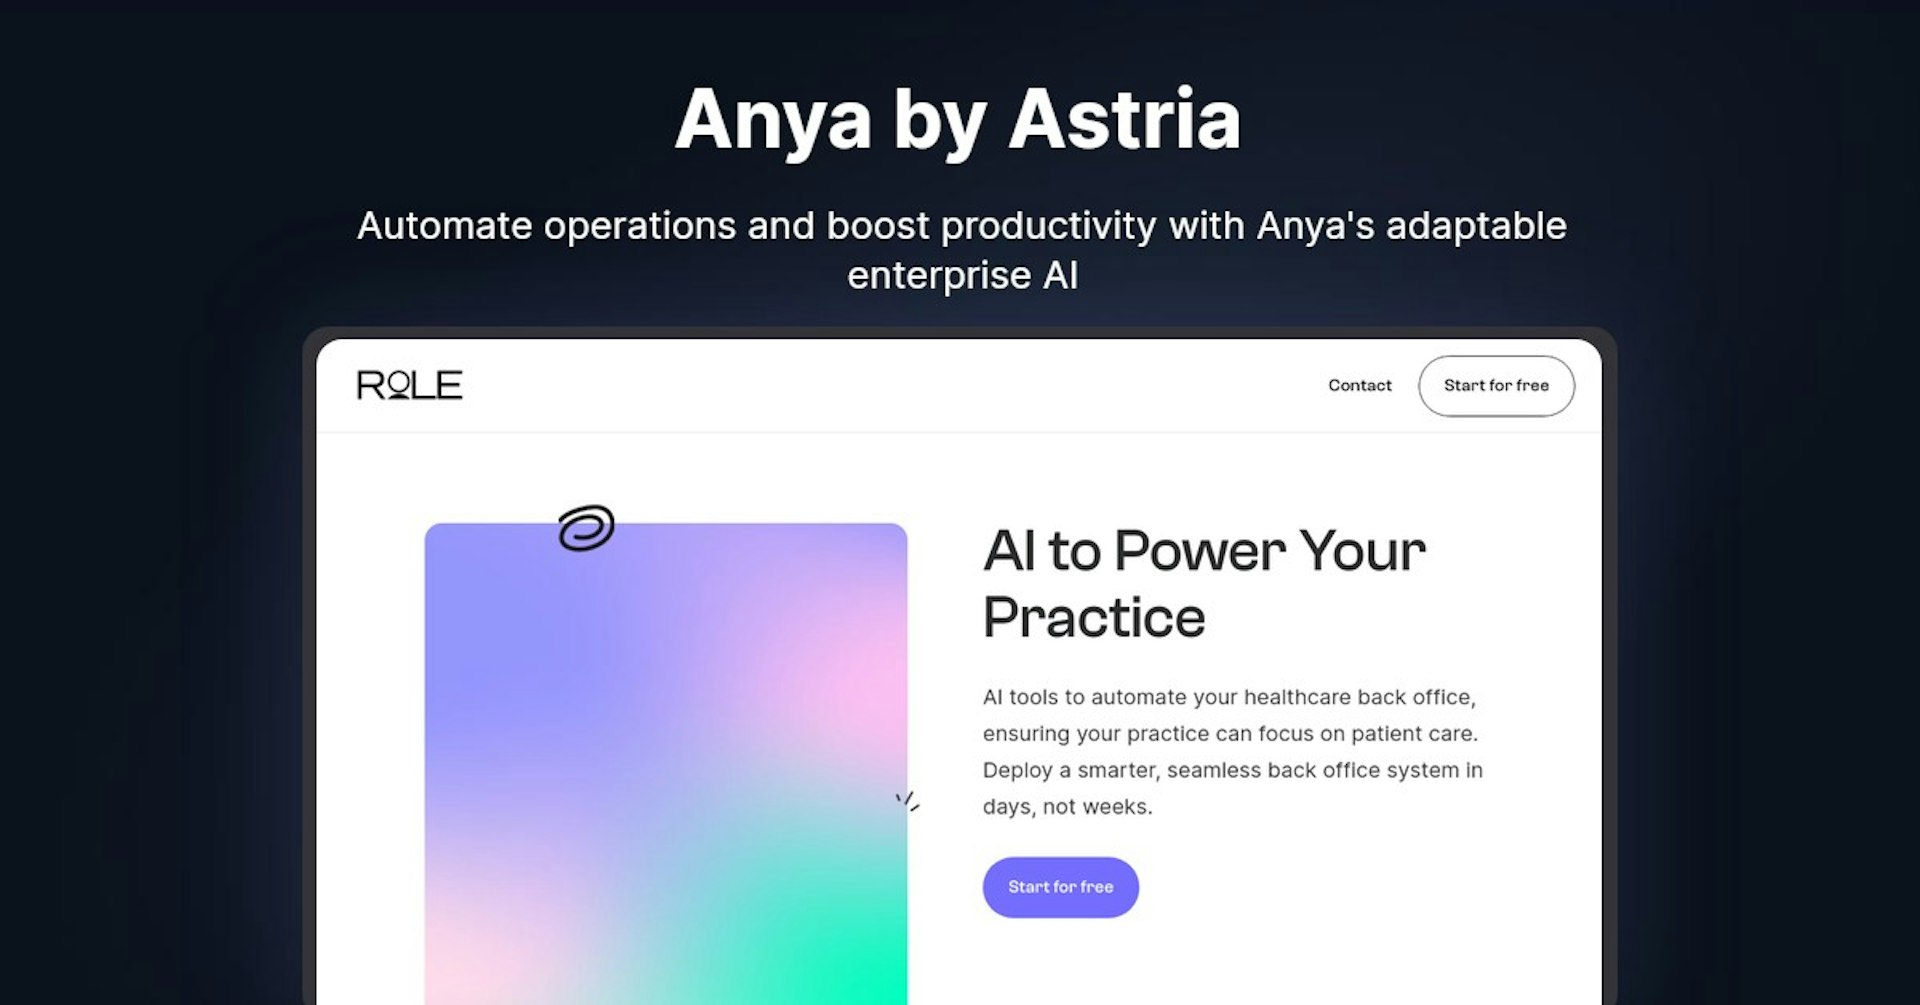 Anya by Astria